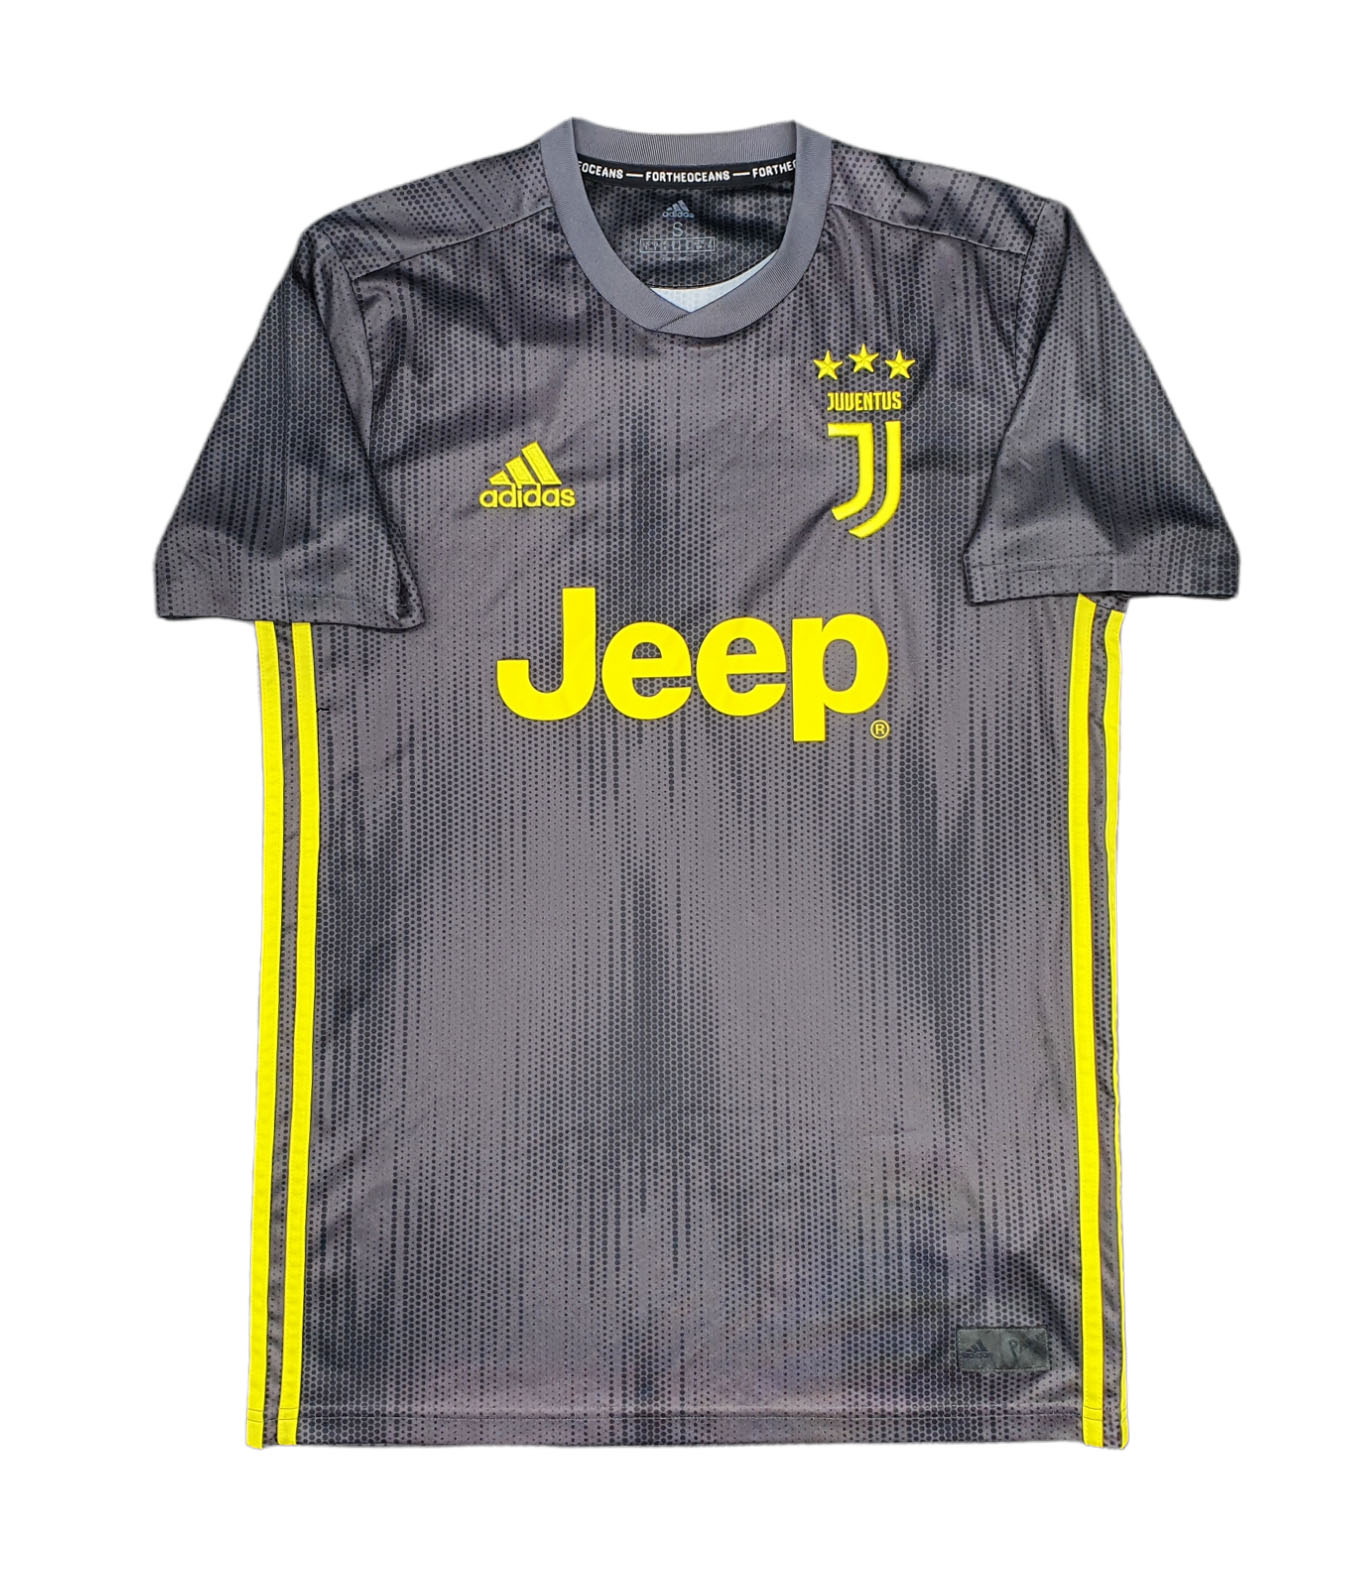 Juventus 2018-19 maglia Adidas third » BOLA Football Store